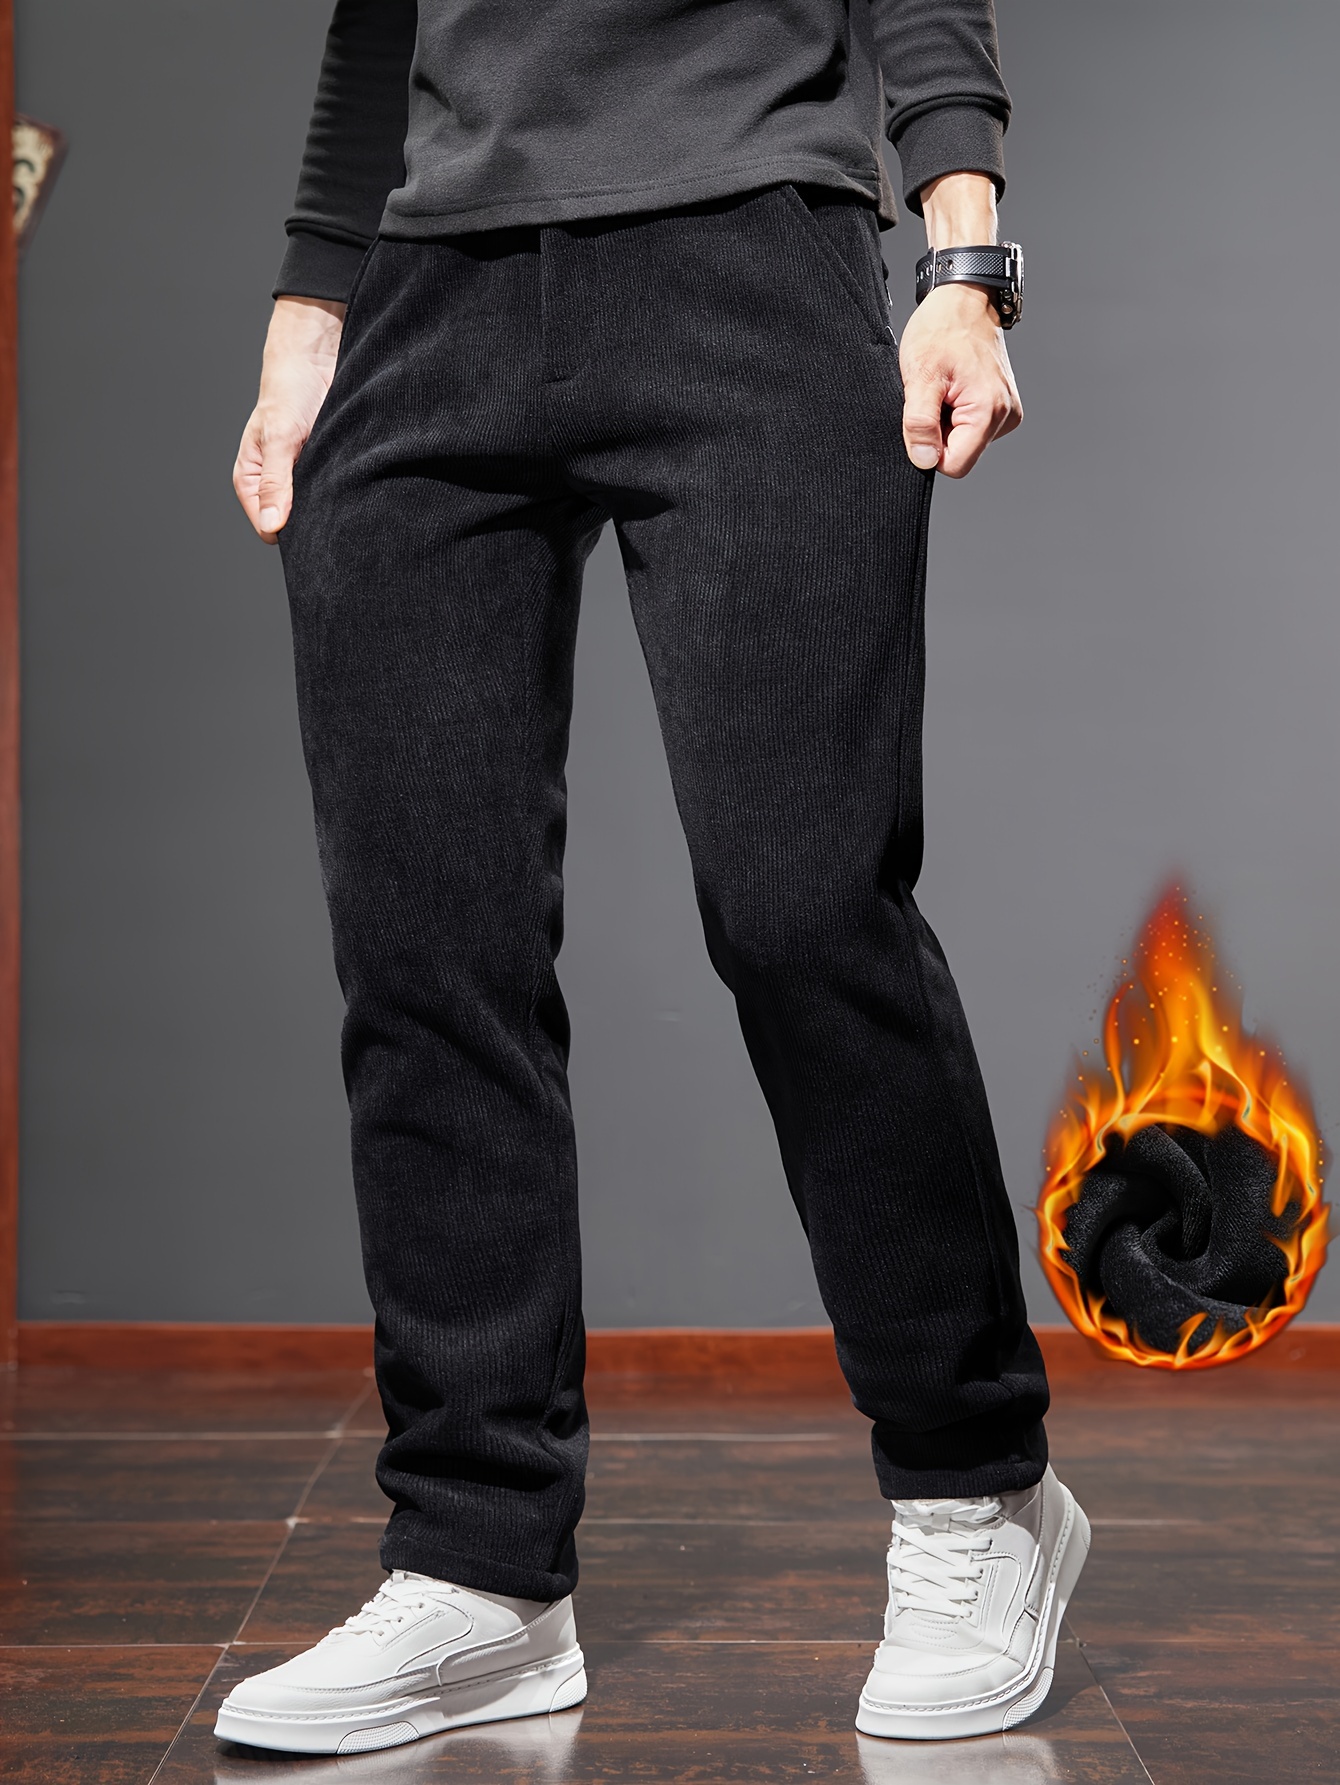 Casual Winter Men's Thick Fur Lined Pants Warm Solid Black Elastic